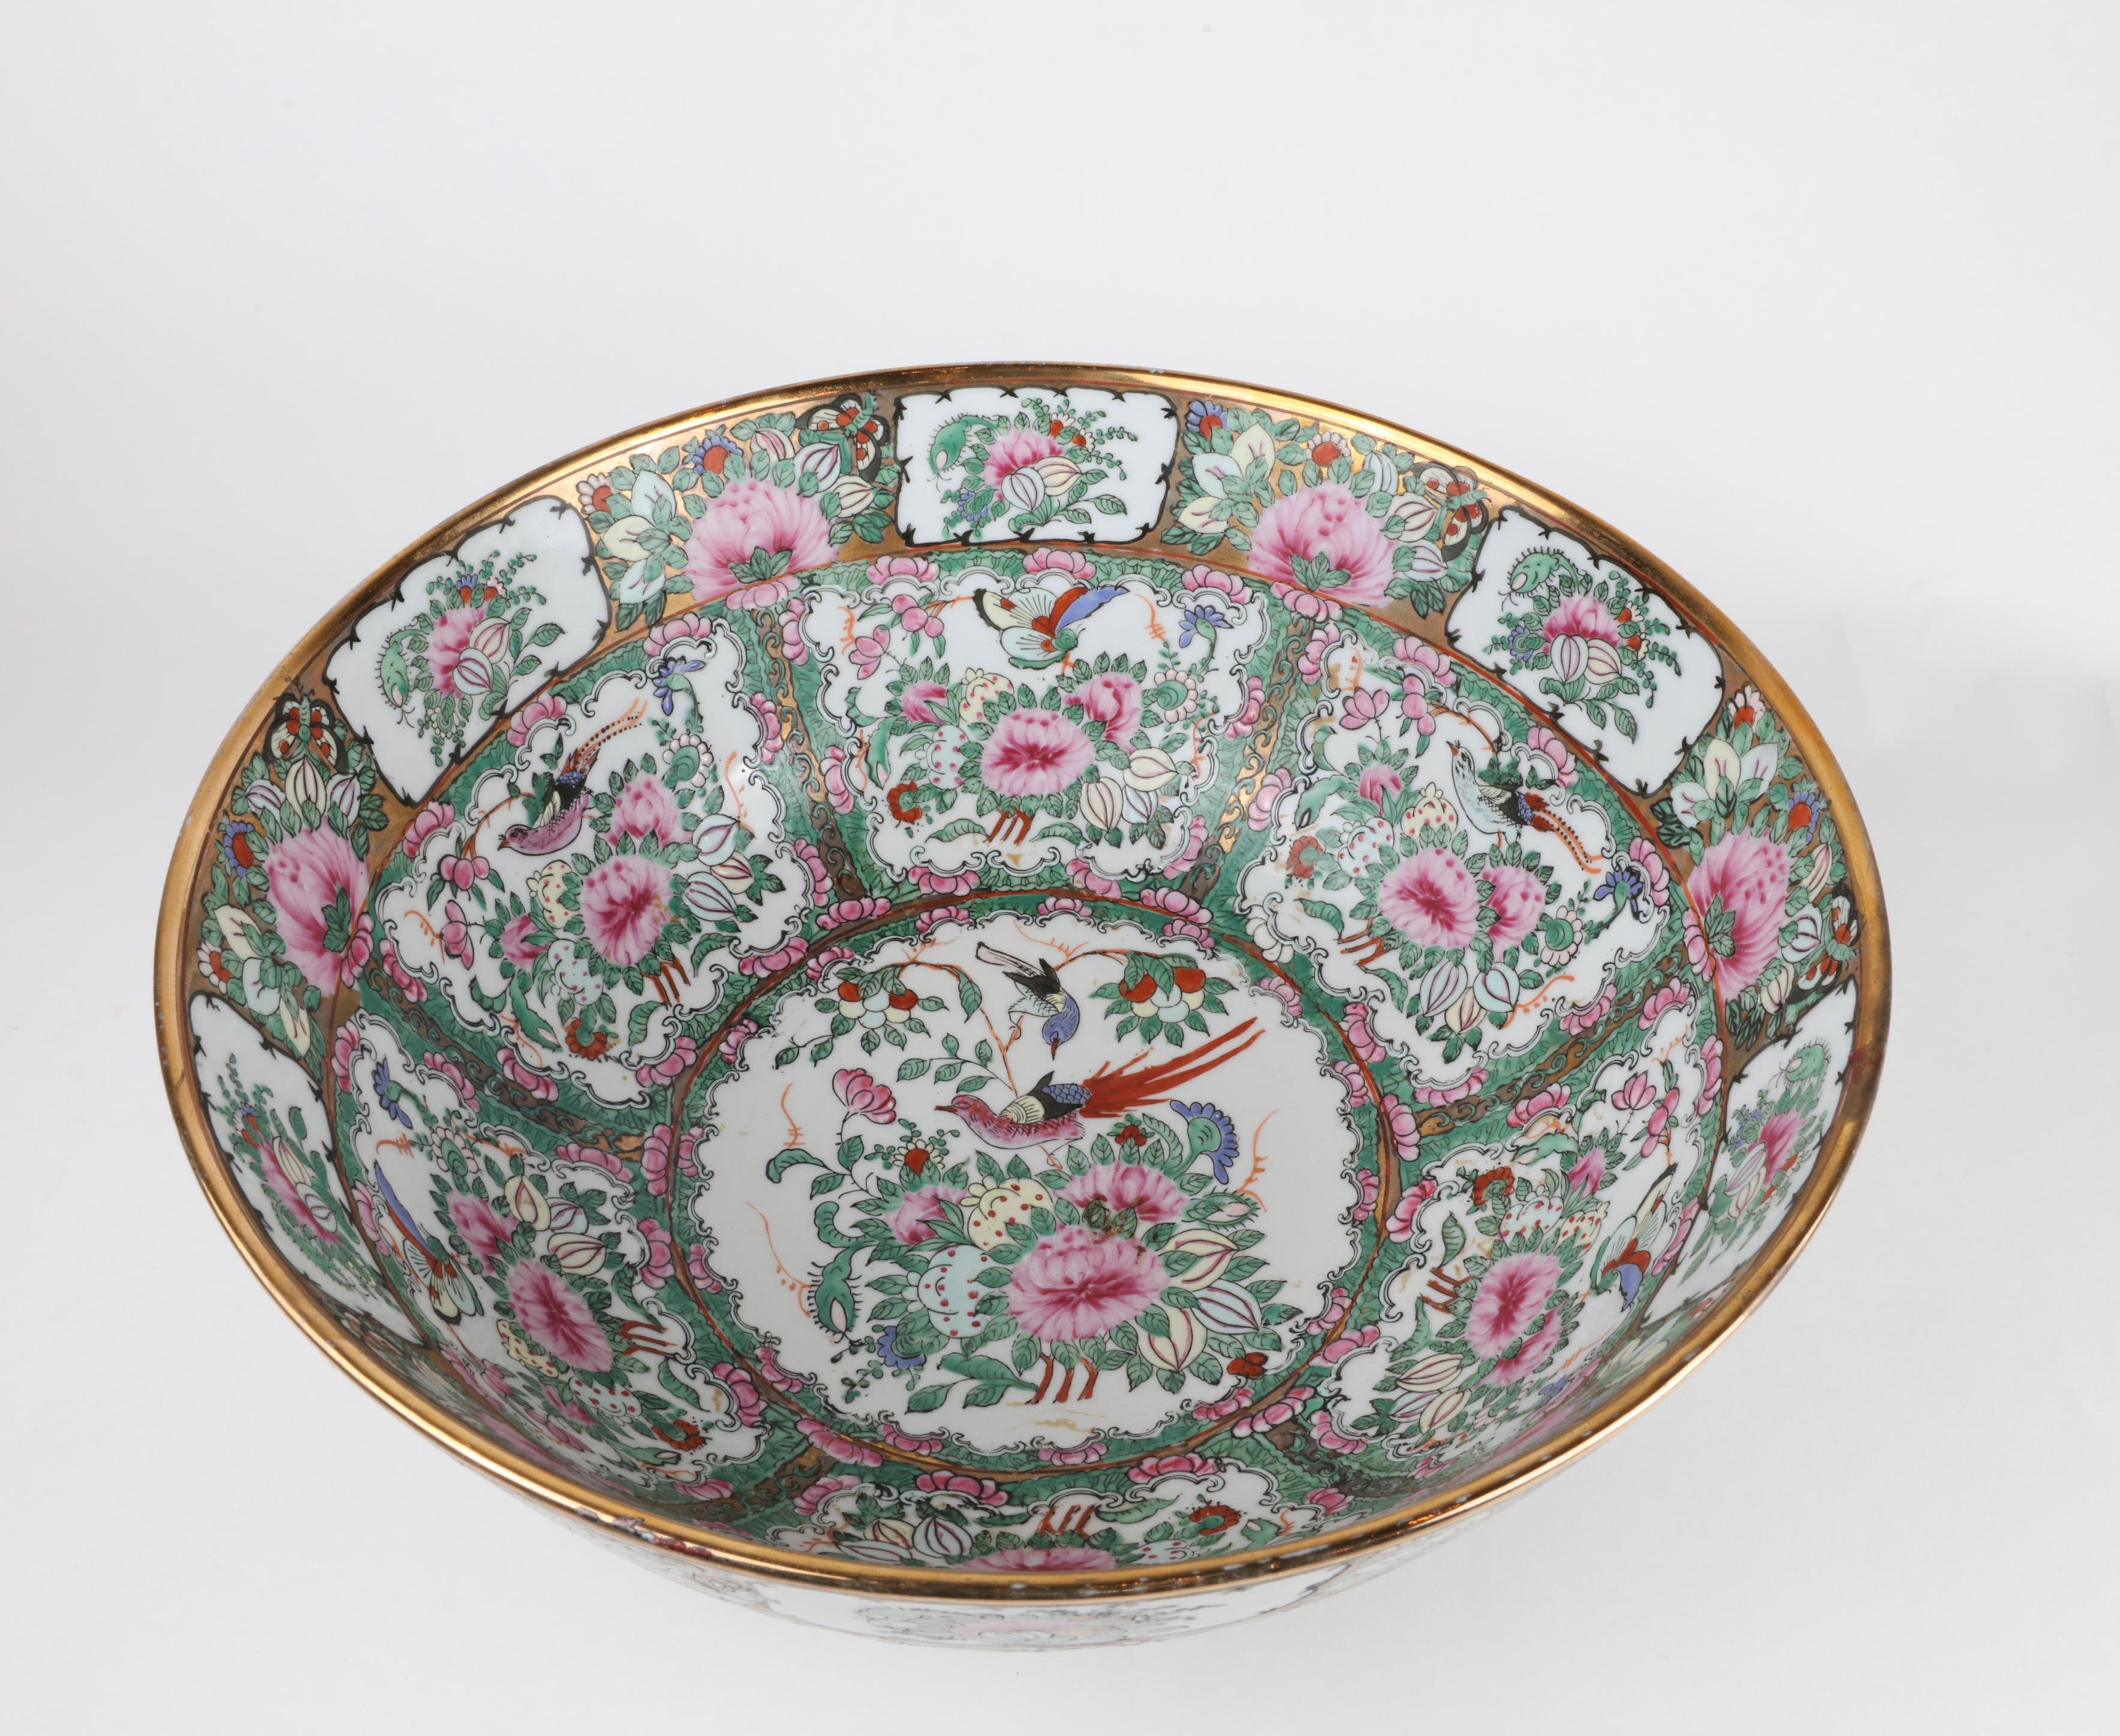 Large decorative famille rose bowl

Measures: 6.5